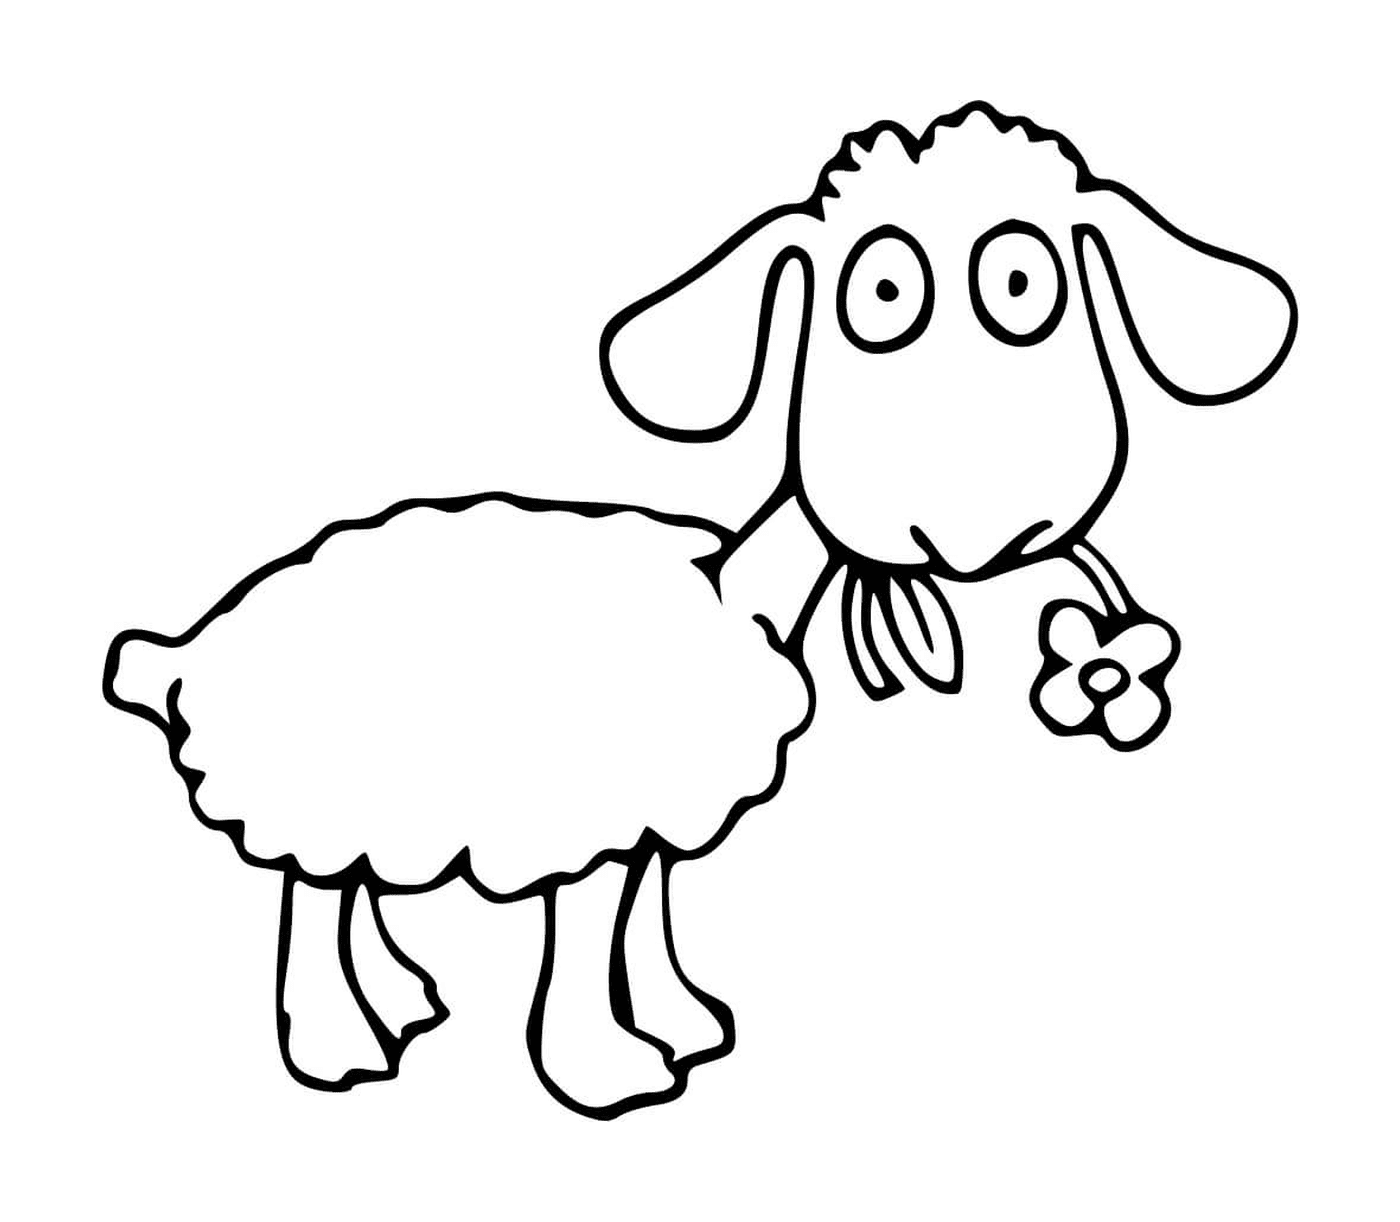  sheep eating a flower 